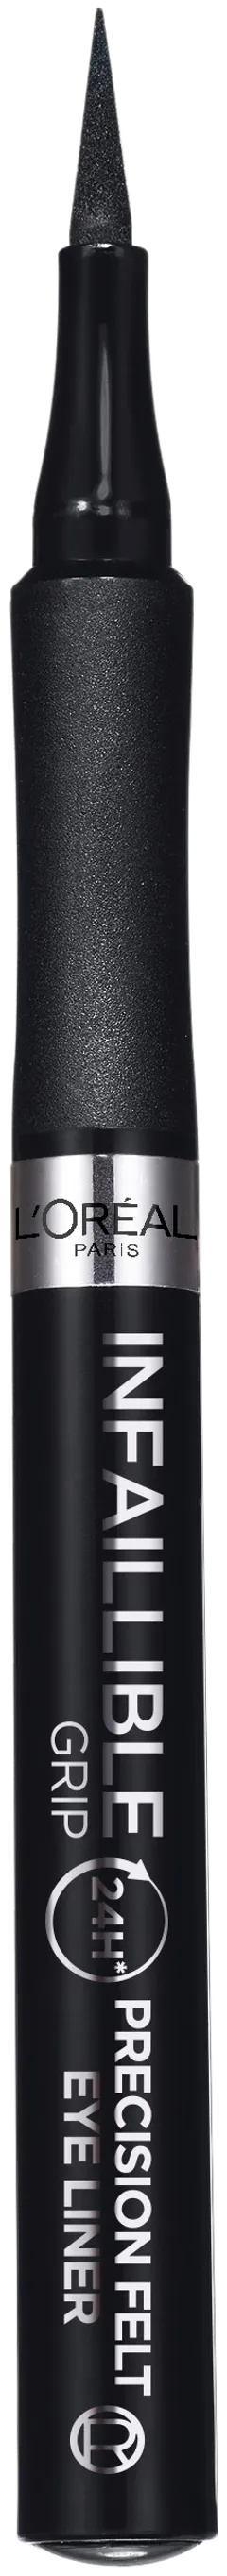 L'Oréal Paris Infaillible Grip 24H Precision Felt eyeliner 01 Black nestemäinen silmänrajausväri 1 kpl - 01 black - 3